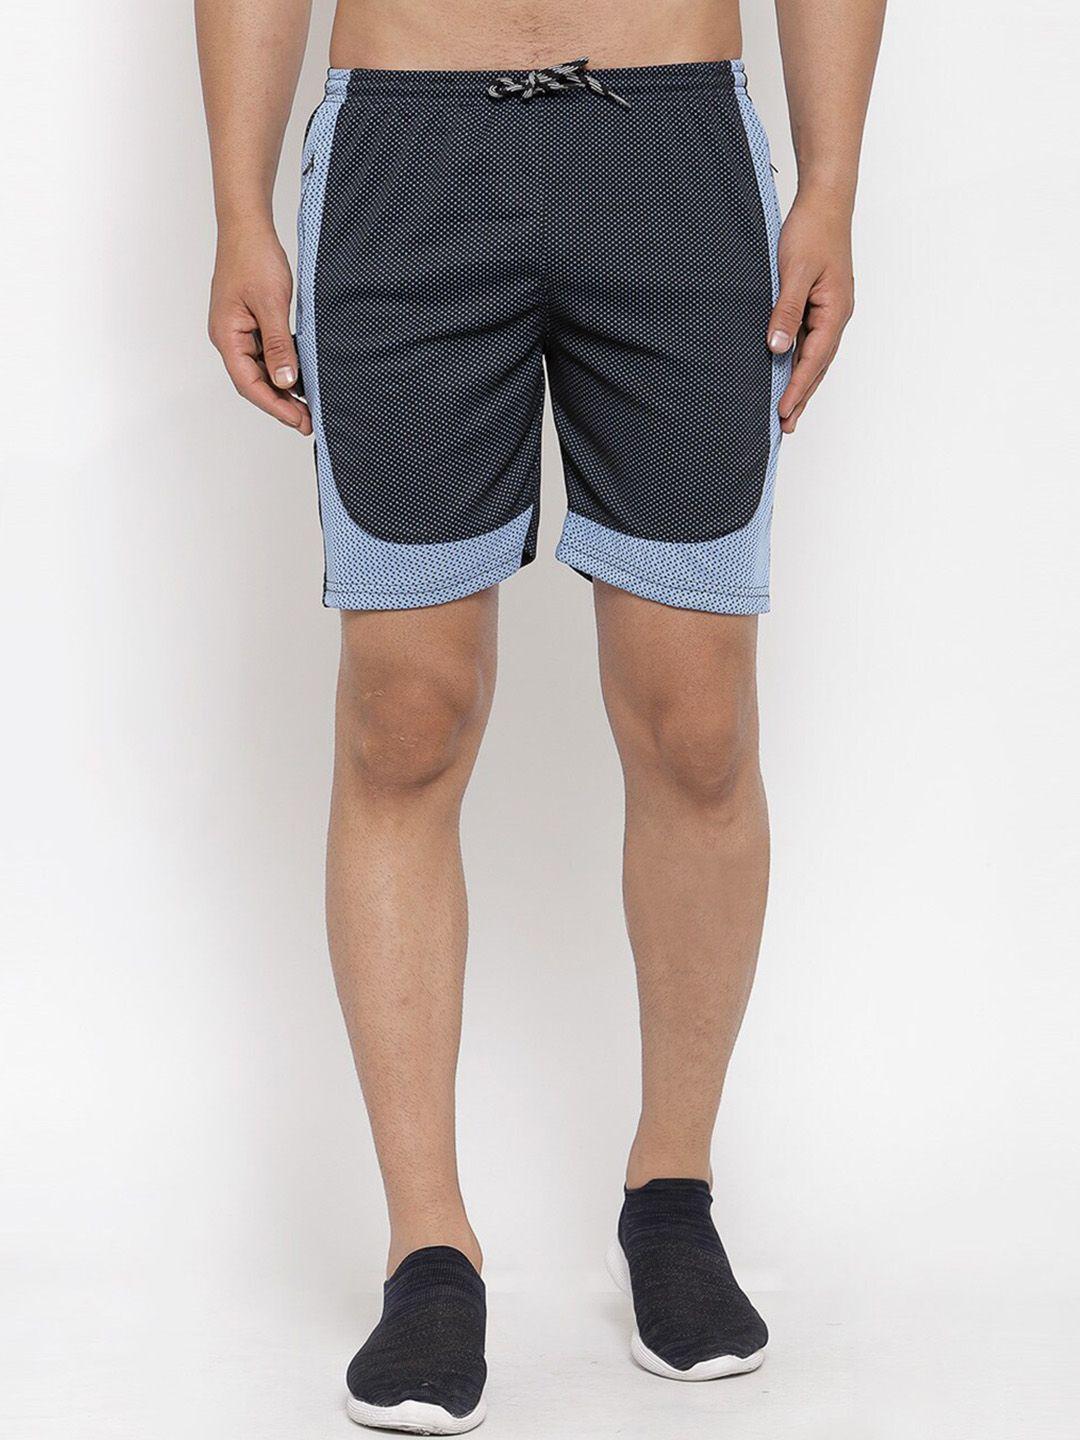 klotthe men geometric printed rapid-dry sports shorts